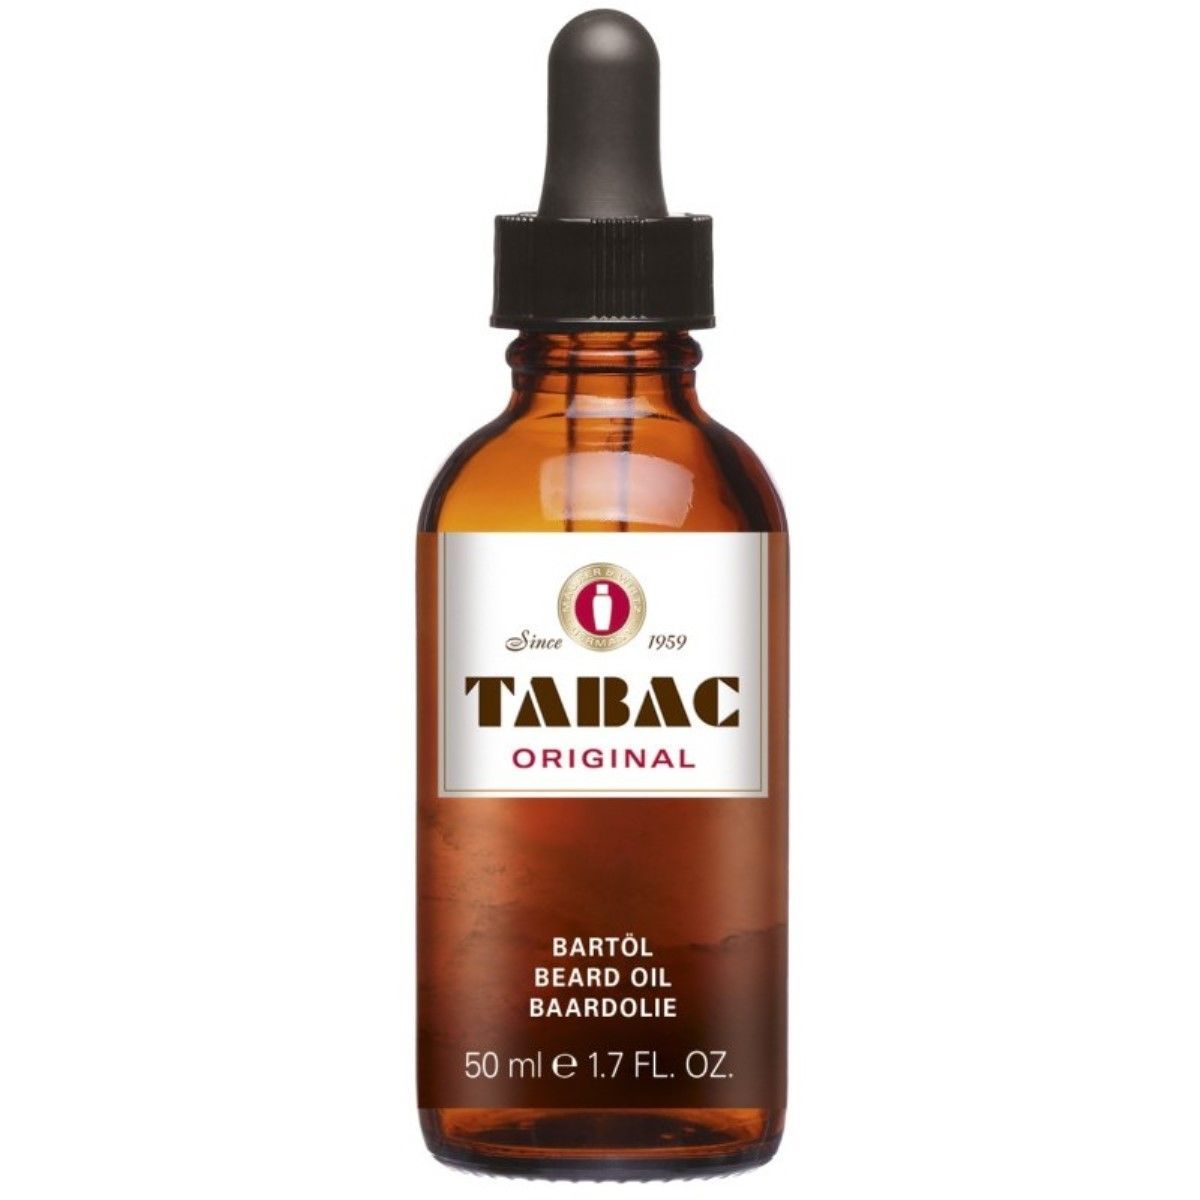 Tabac Original Beard Oil